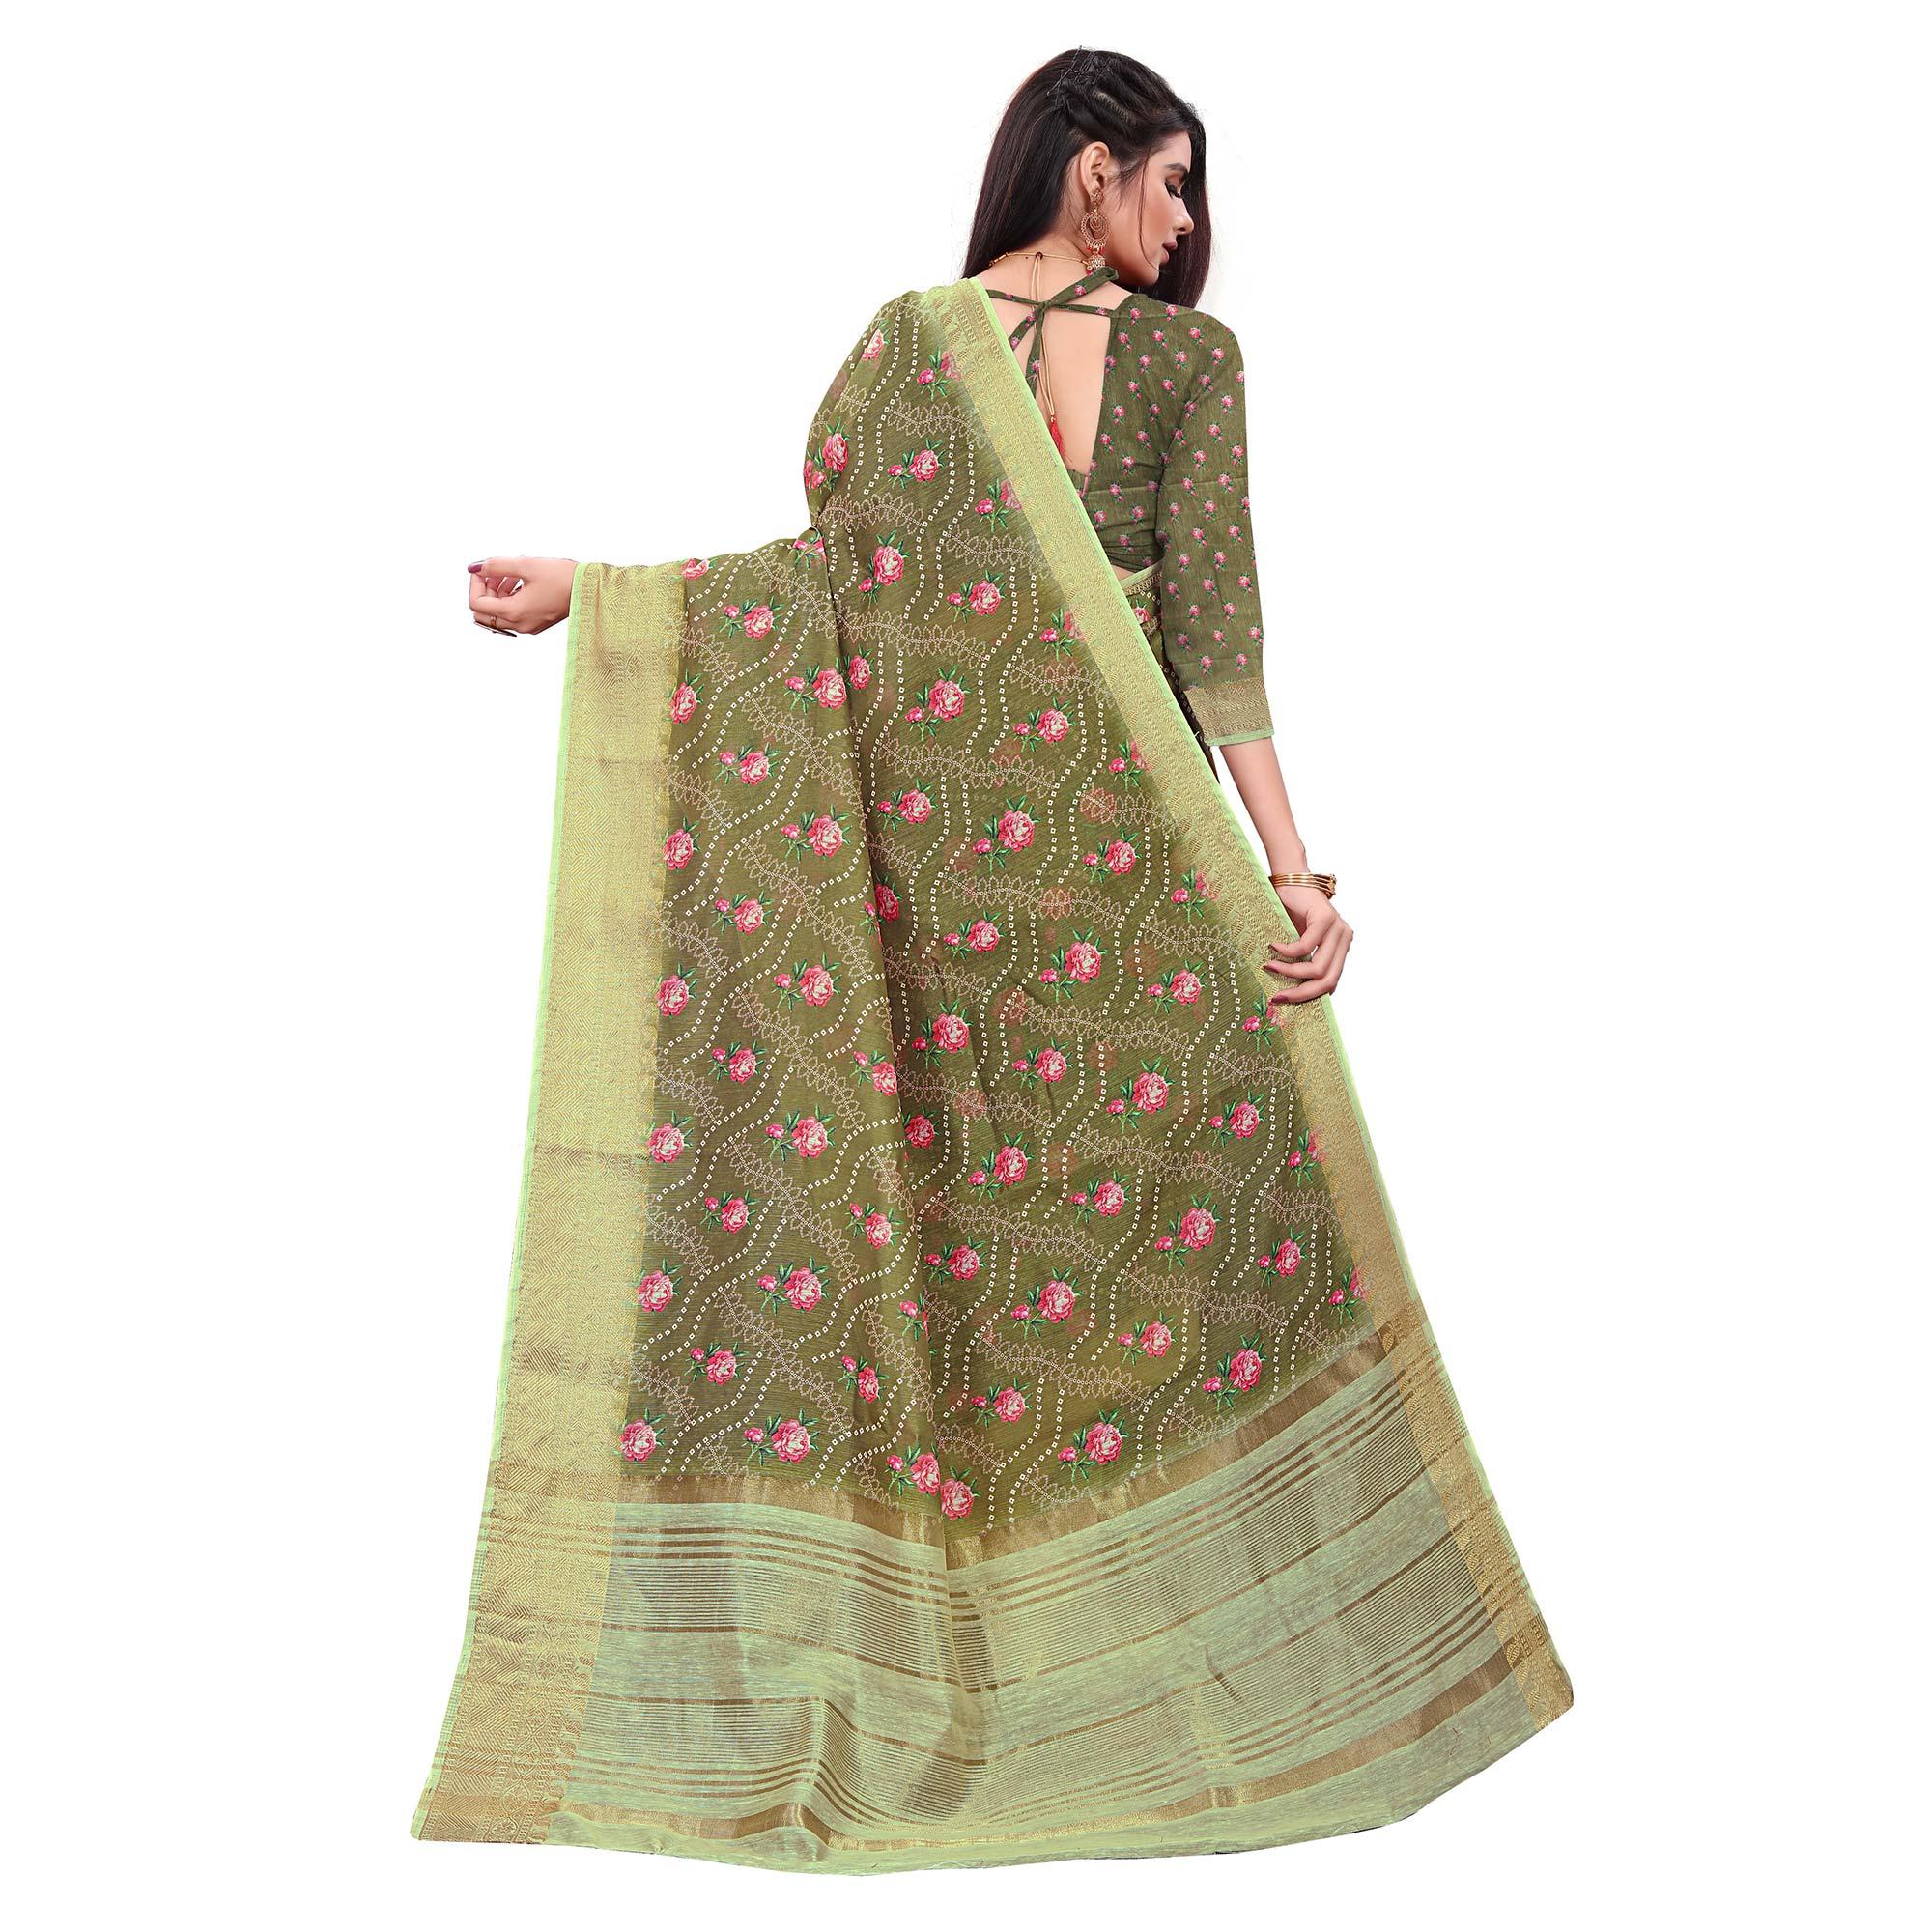 Entrancing Olive Green Colored Festive Wear Woven Banarasi Silk Saree - Peachmode